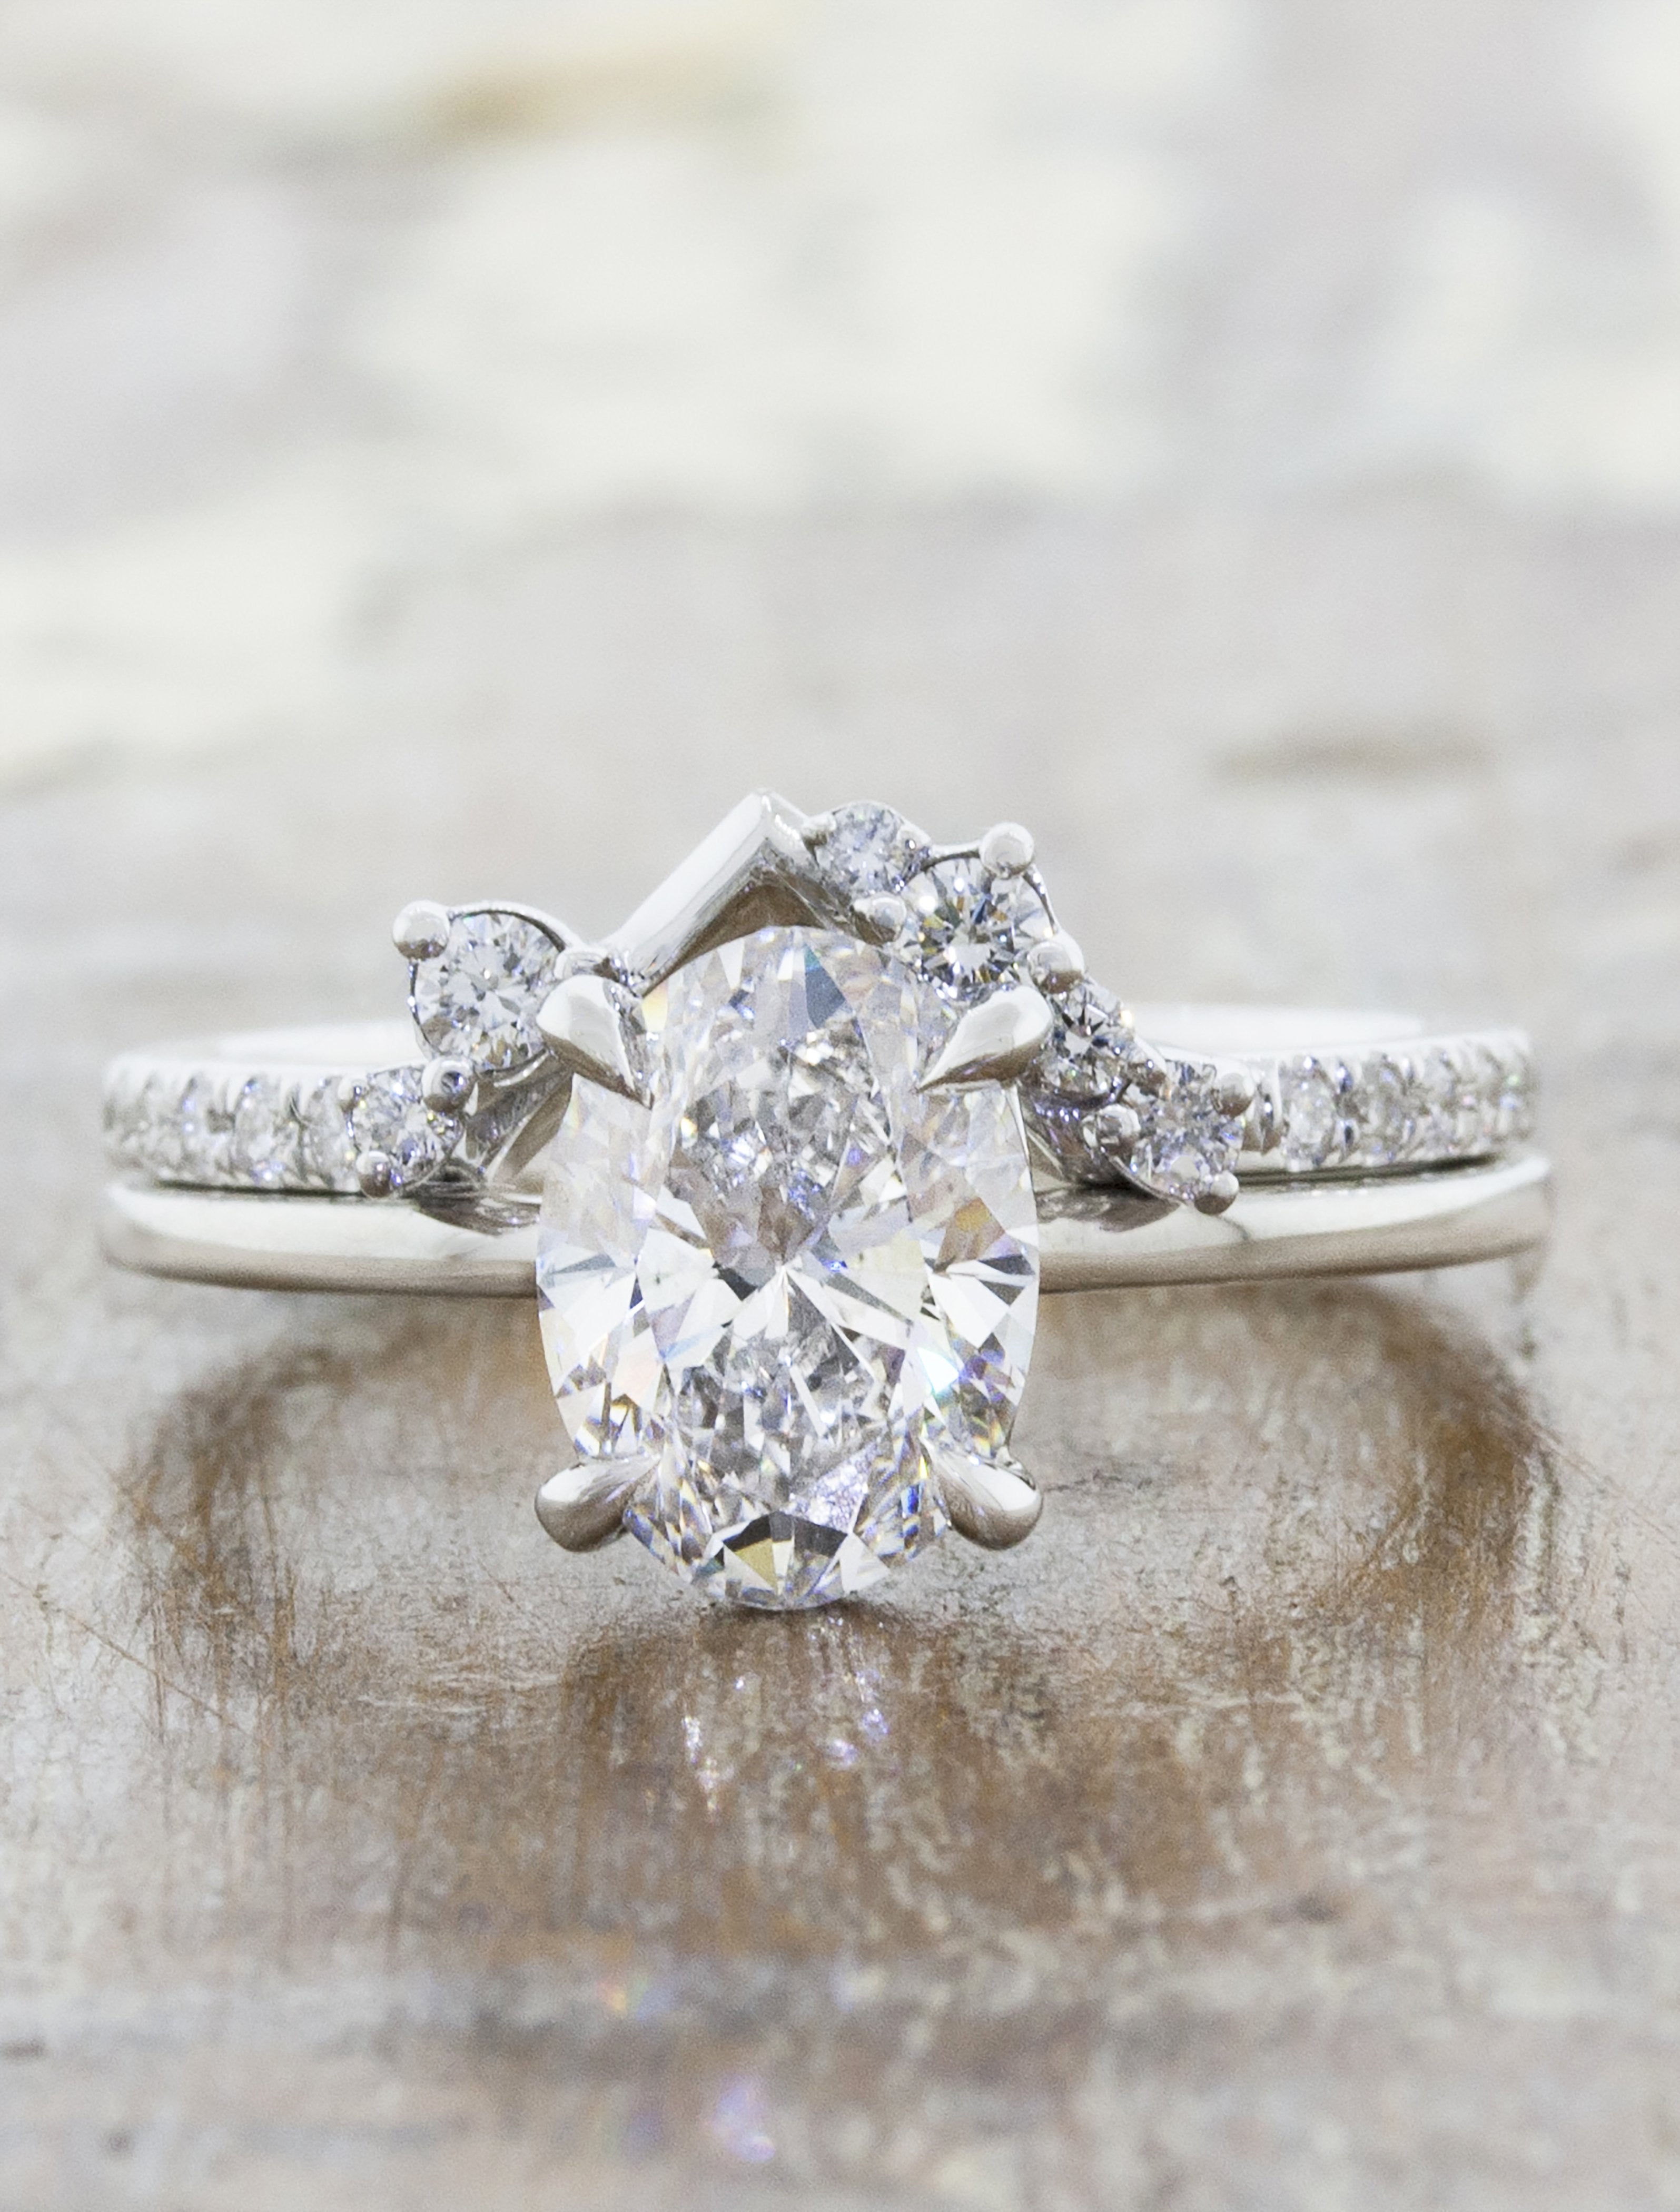 Brinky: Intricate Wedding Ring with Round Diamond Clusters | Ken & Dana